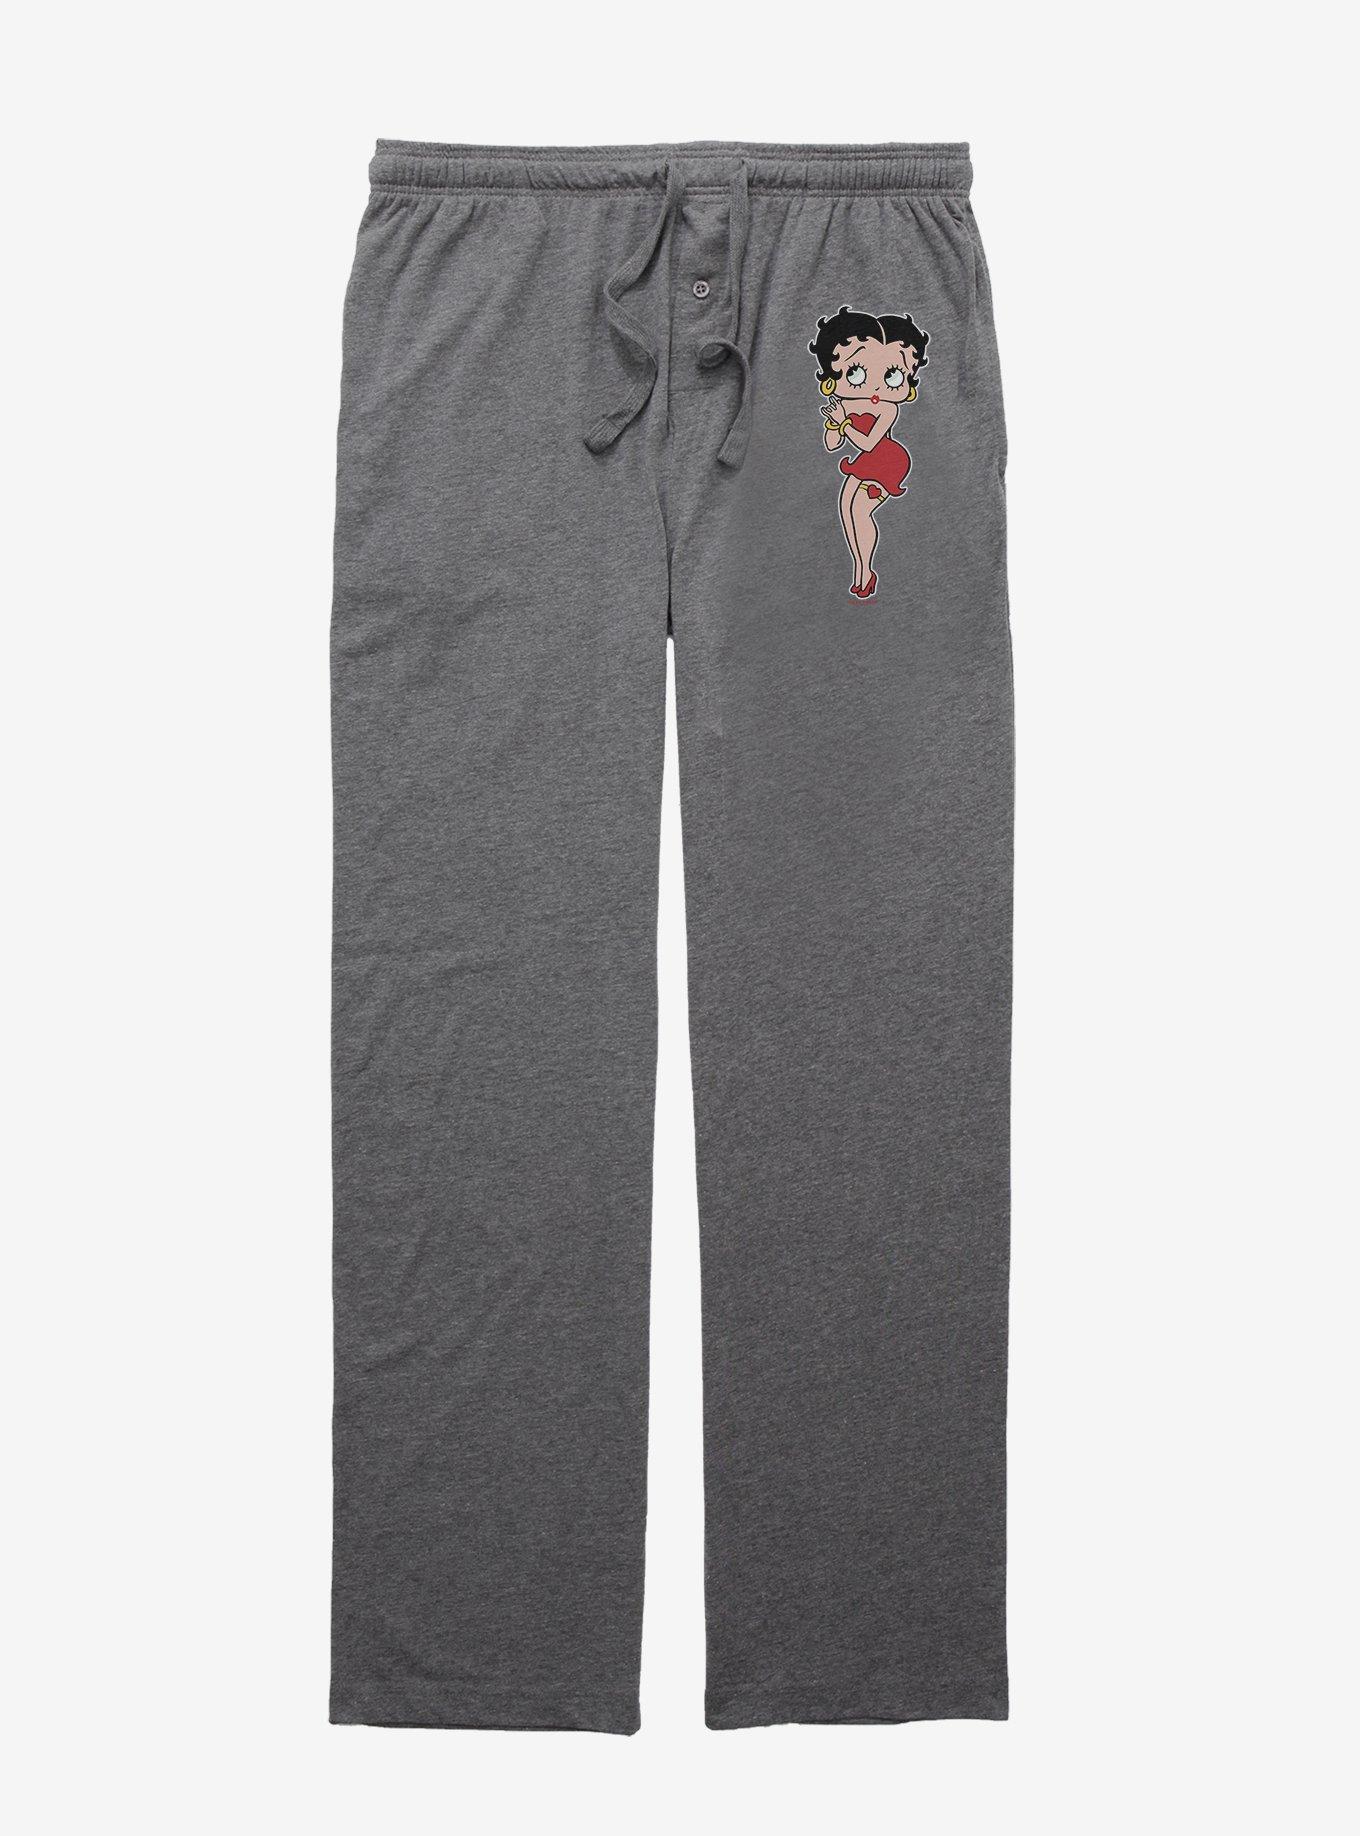 Betty Boop Pose Pajama Pants, GRAPHITE HEATHER, hi-res